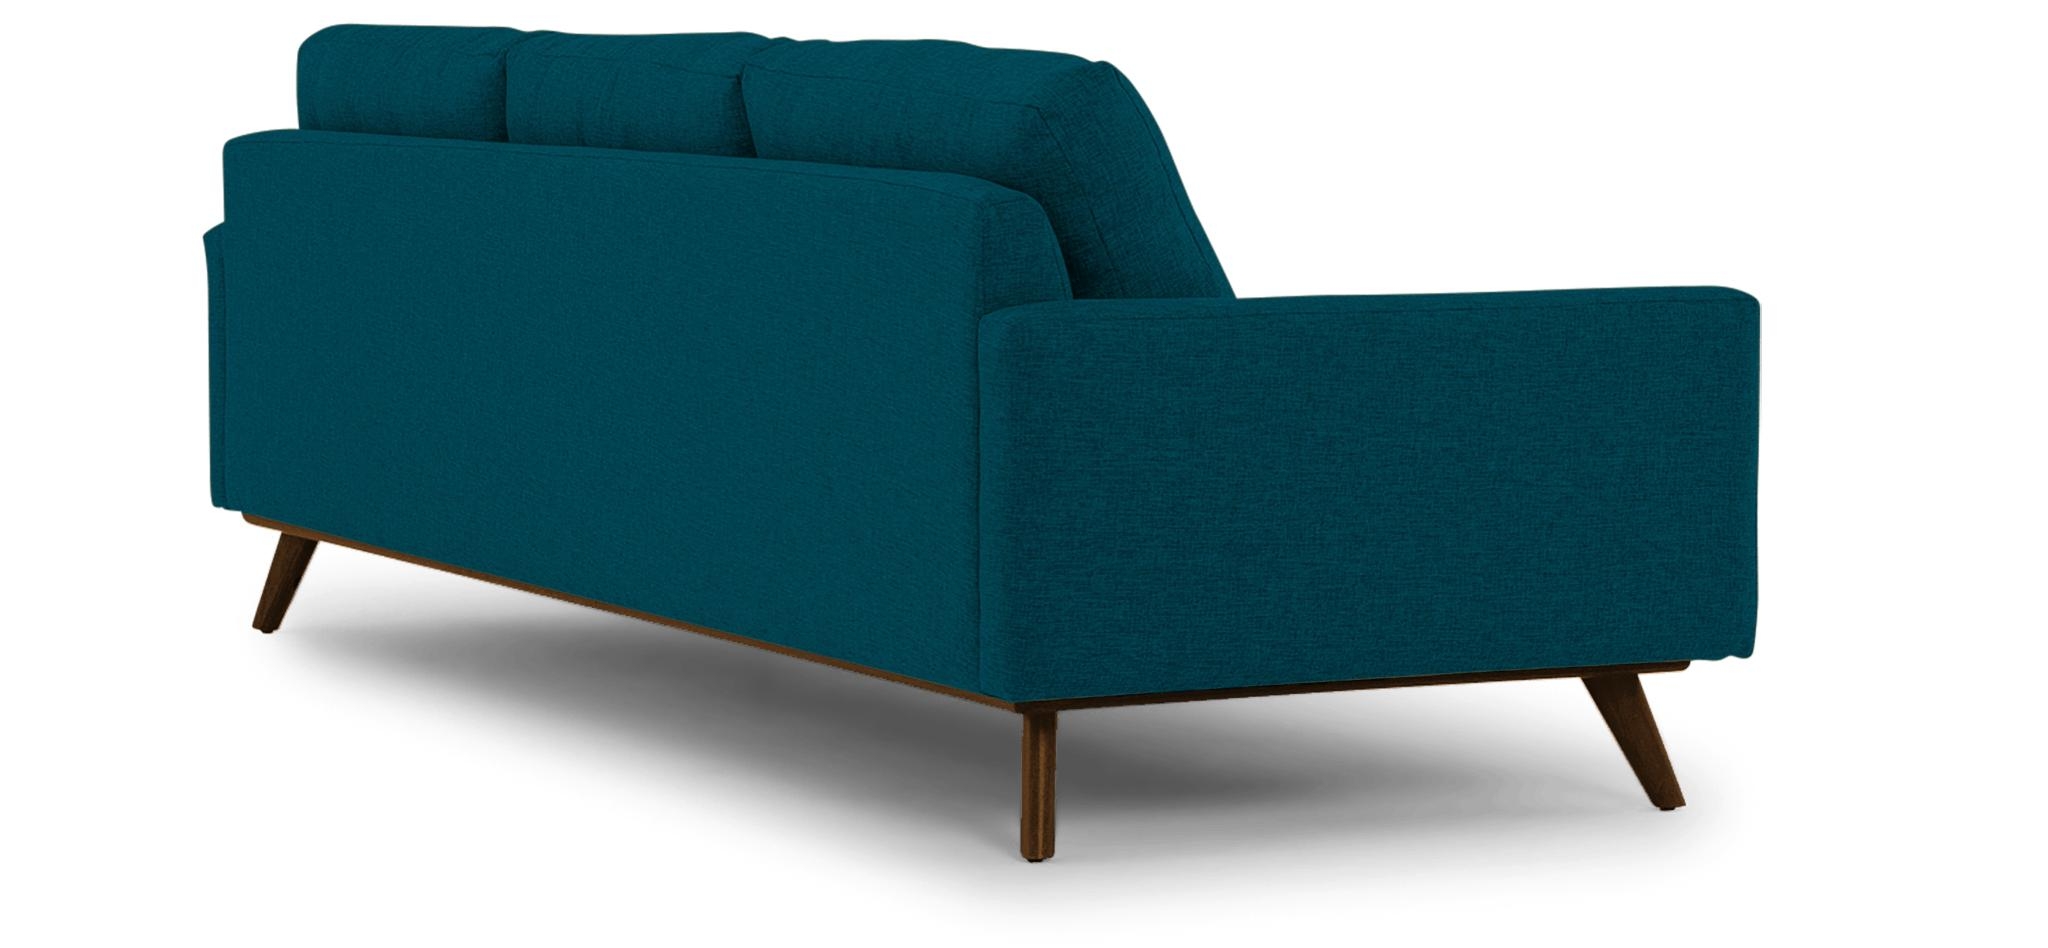 Blue Hopson Mid Century Modern Grand Sofa - Key Largo Zenith Teal - Mocha - Image 3